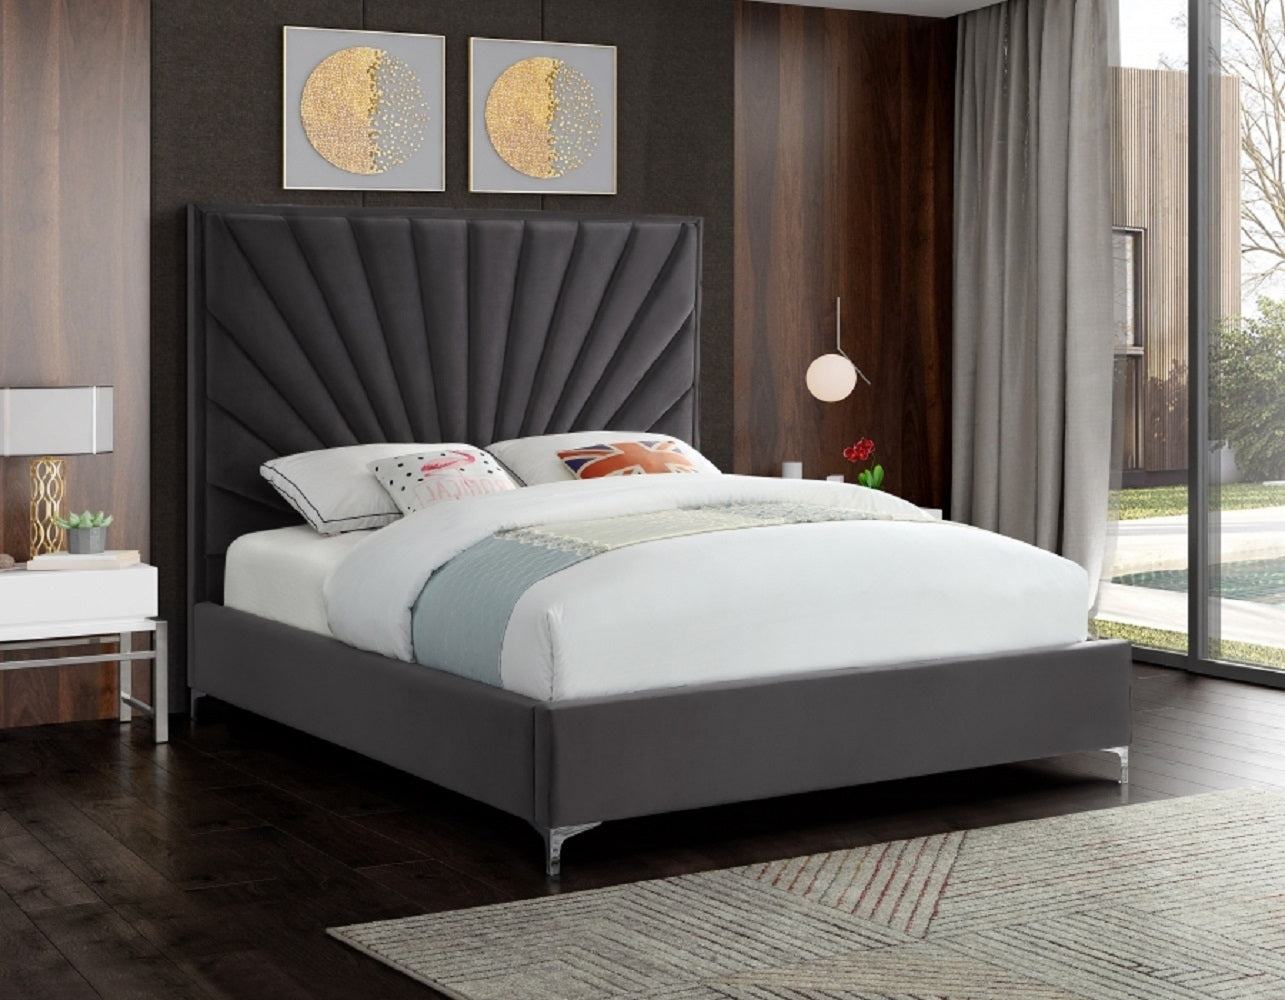 The Bespoke Sam Bed-Fully Customisable with Storage Options- Velvet Monaco Range